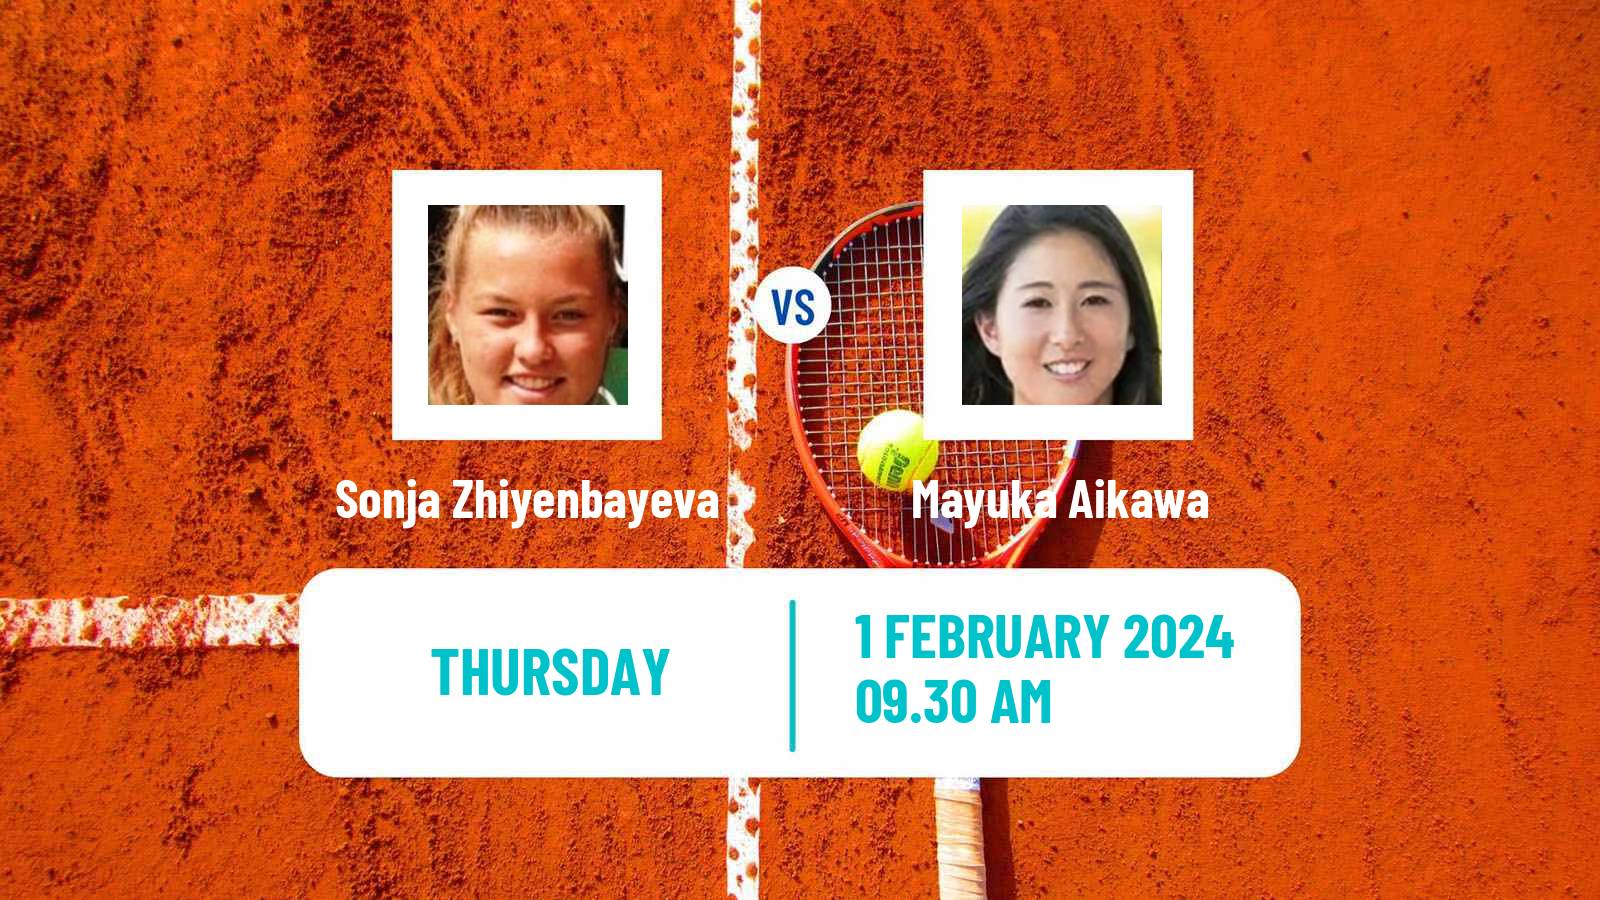 Tennis ITF W15 Antalya Women Sonja Zhiyenbayeva - Mayuka Aikawa